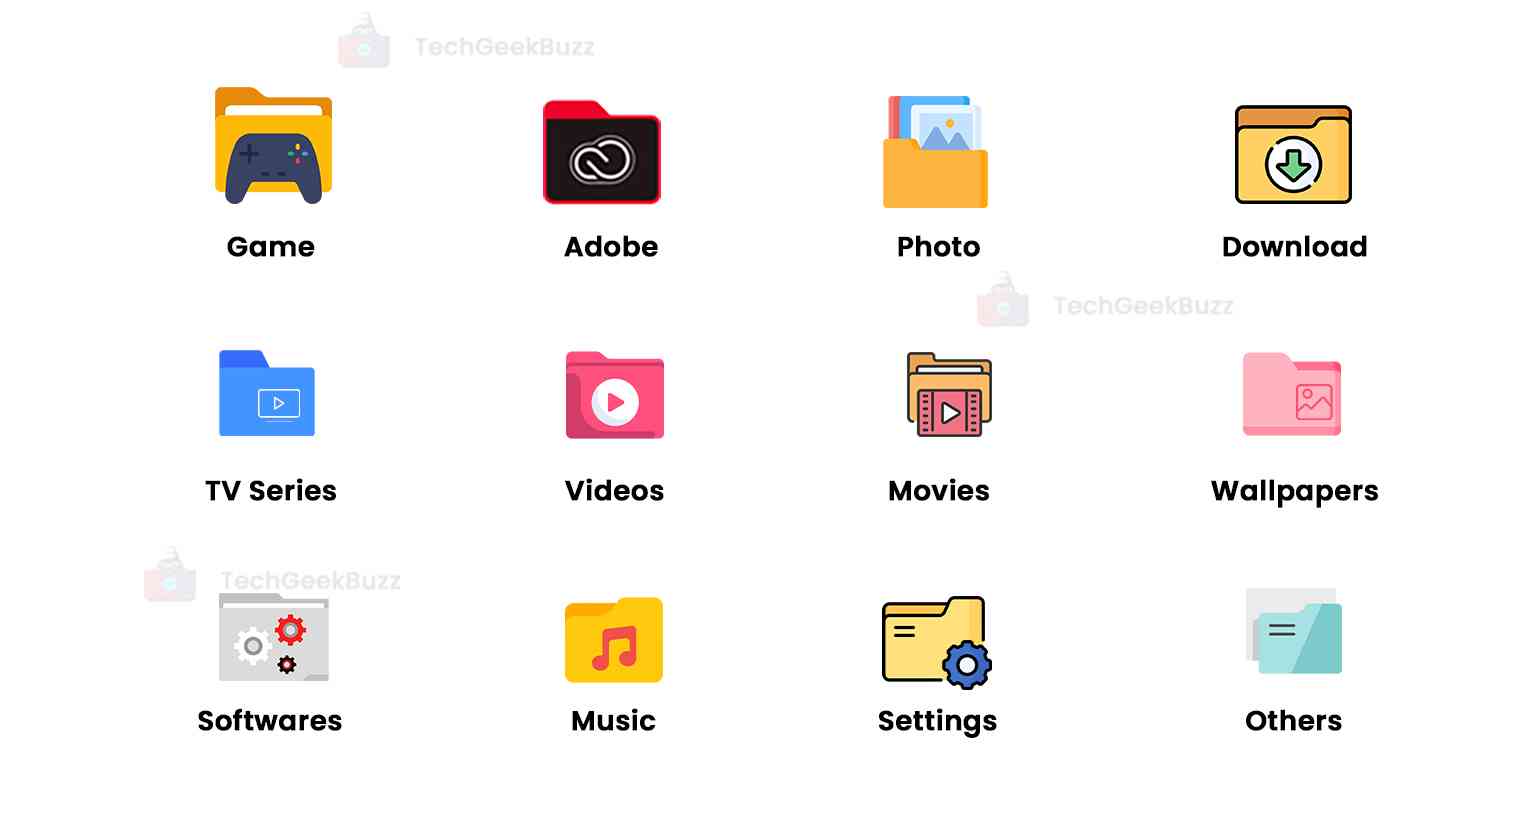 Examplеs of Foldеr Icons